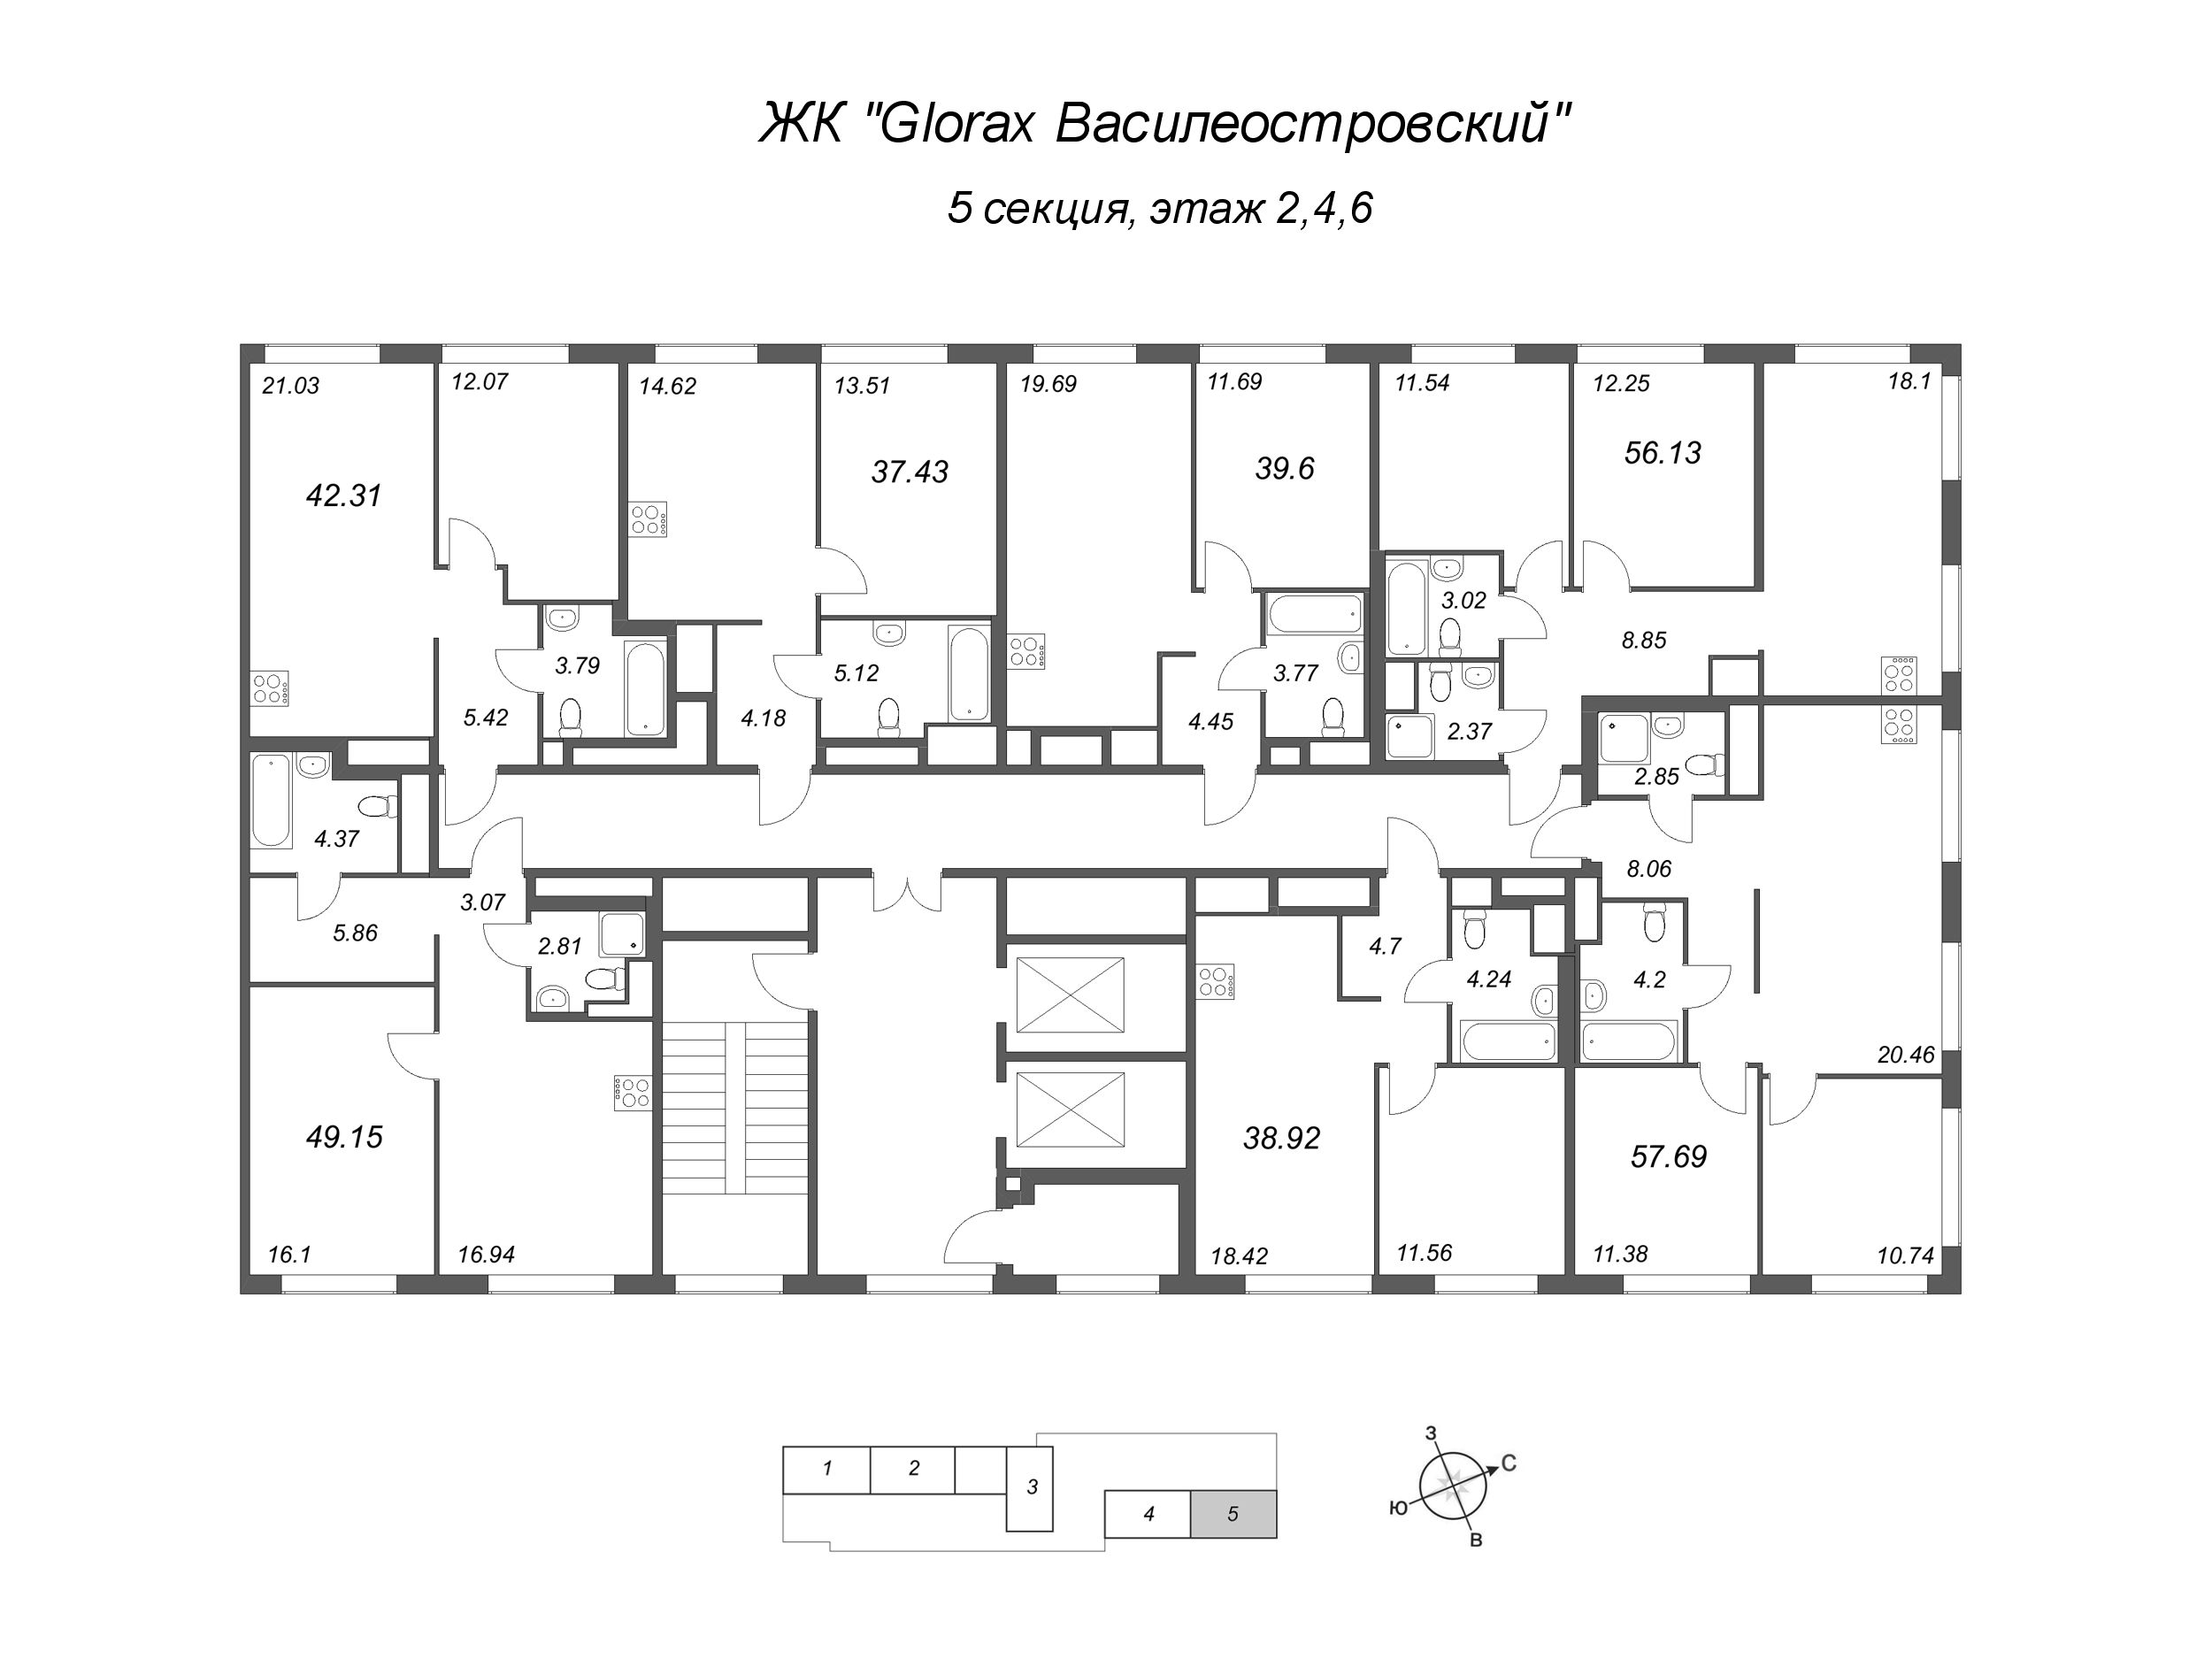 2-комнатная (Евро) квартира, 42.31 м² - планировка этажа